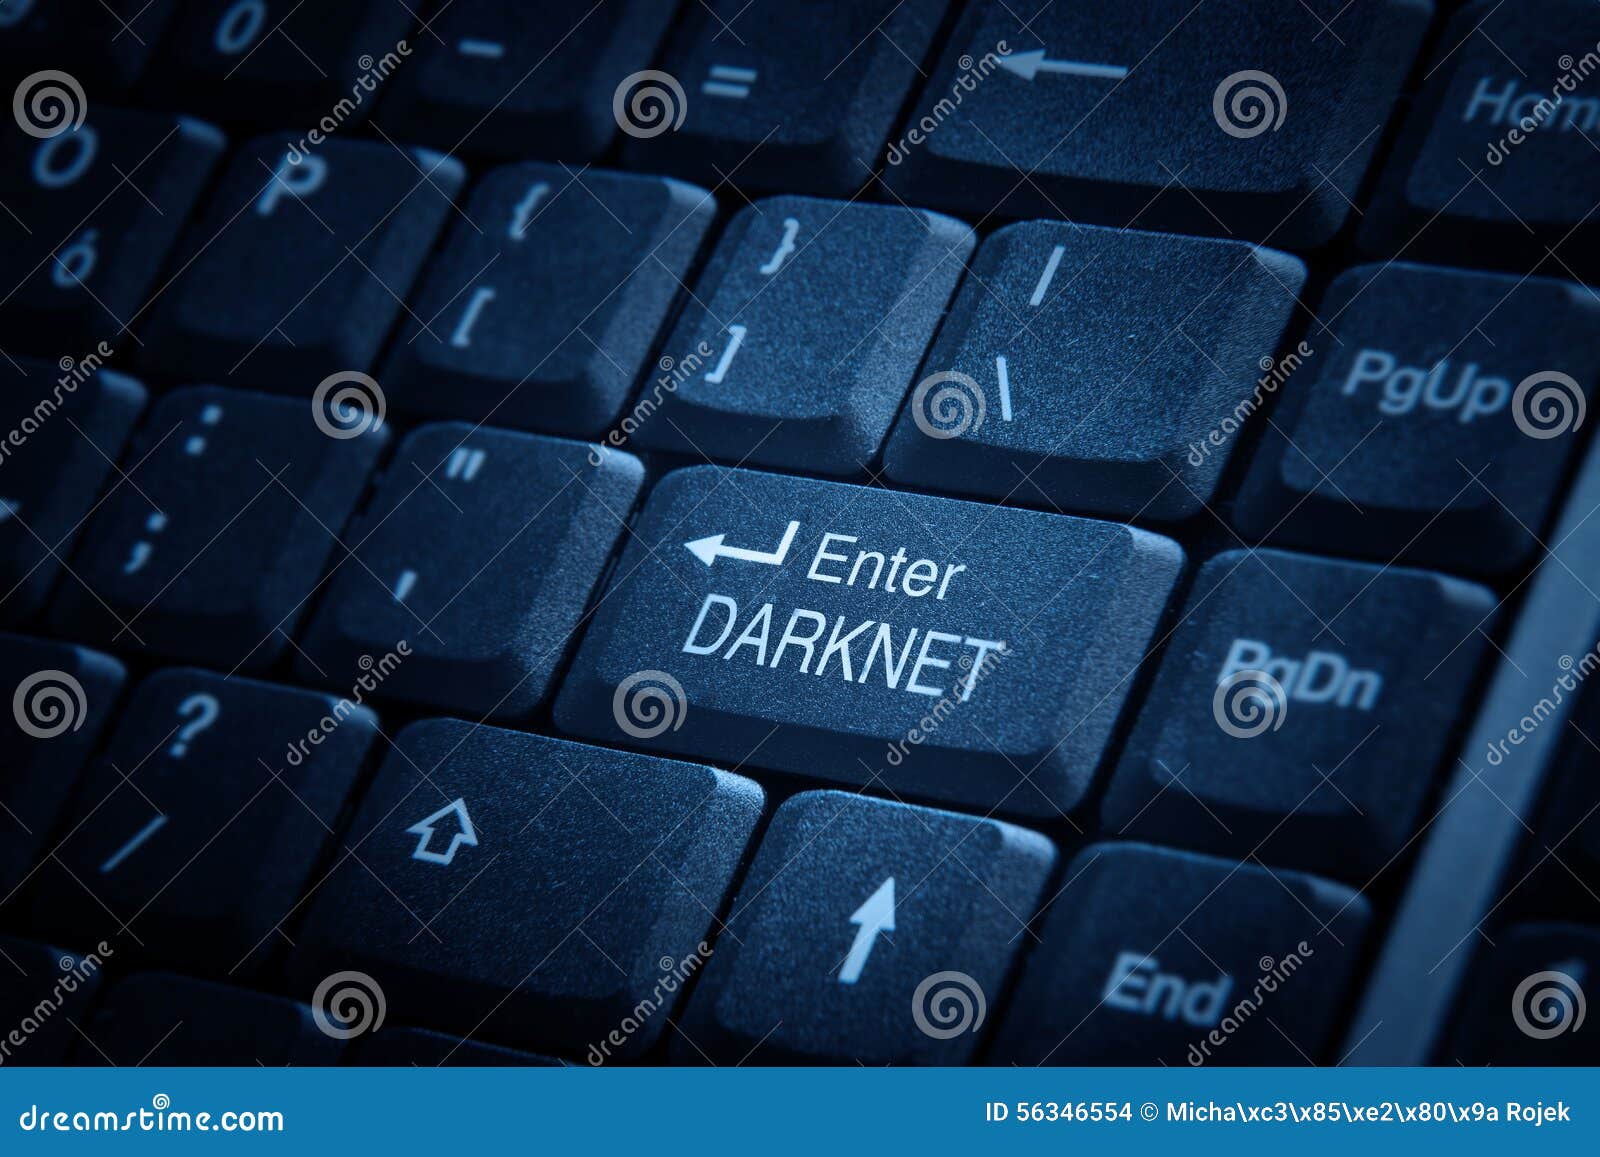 enter darknet гидра